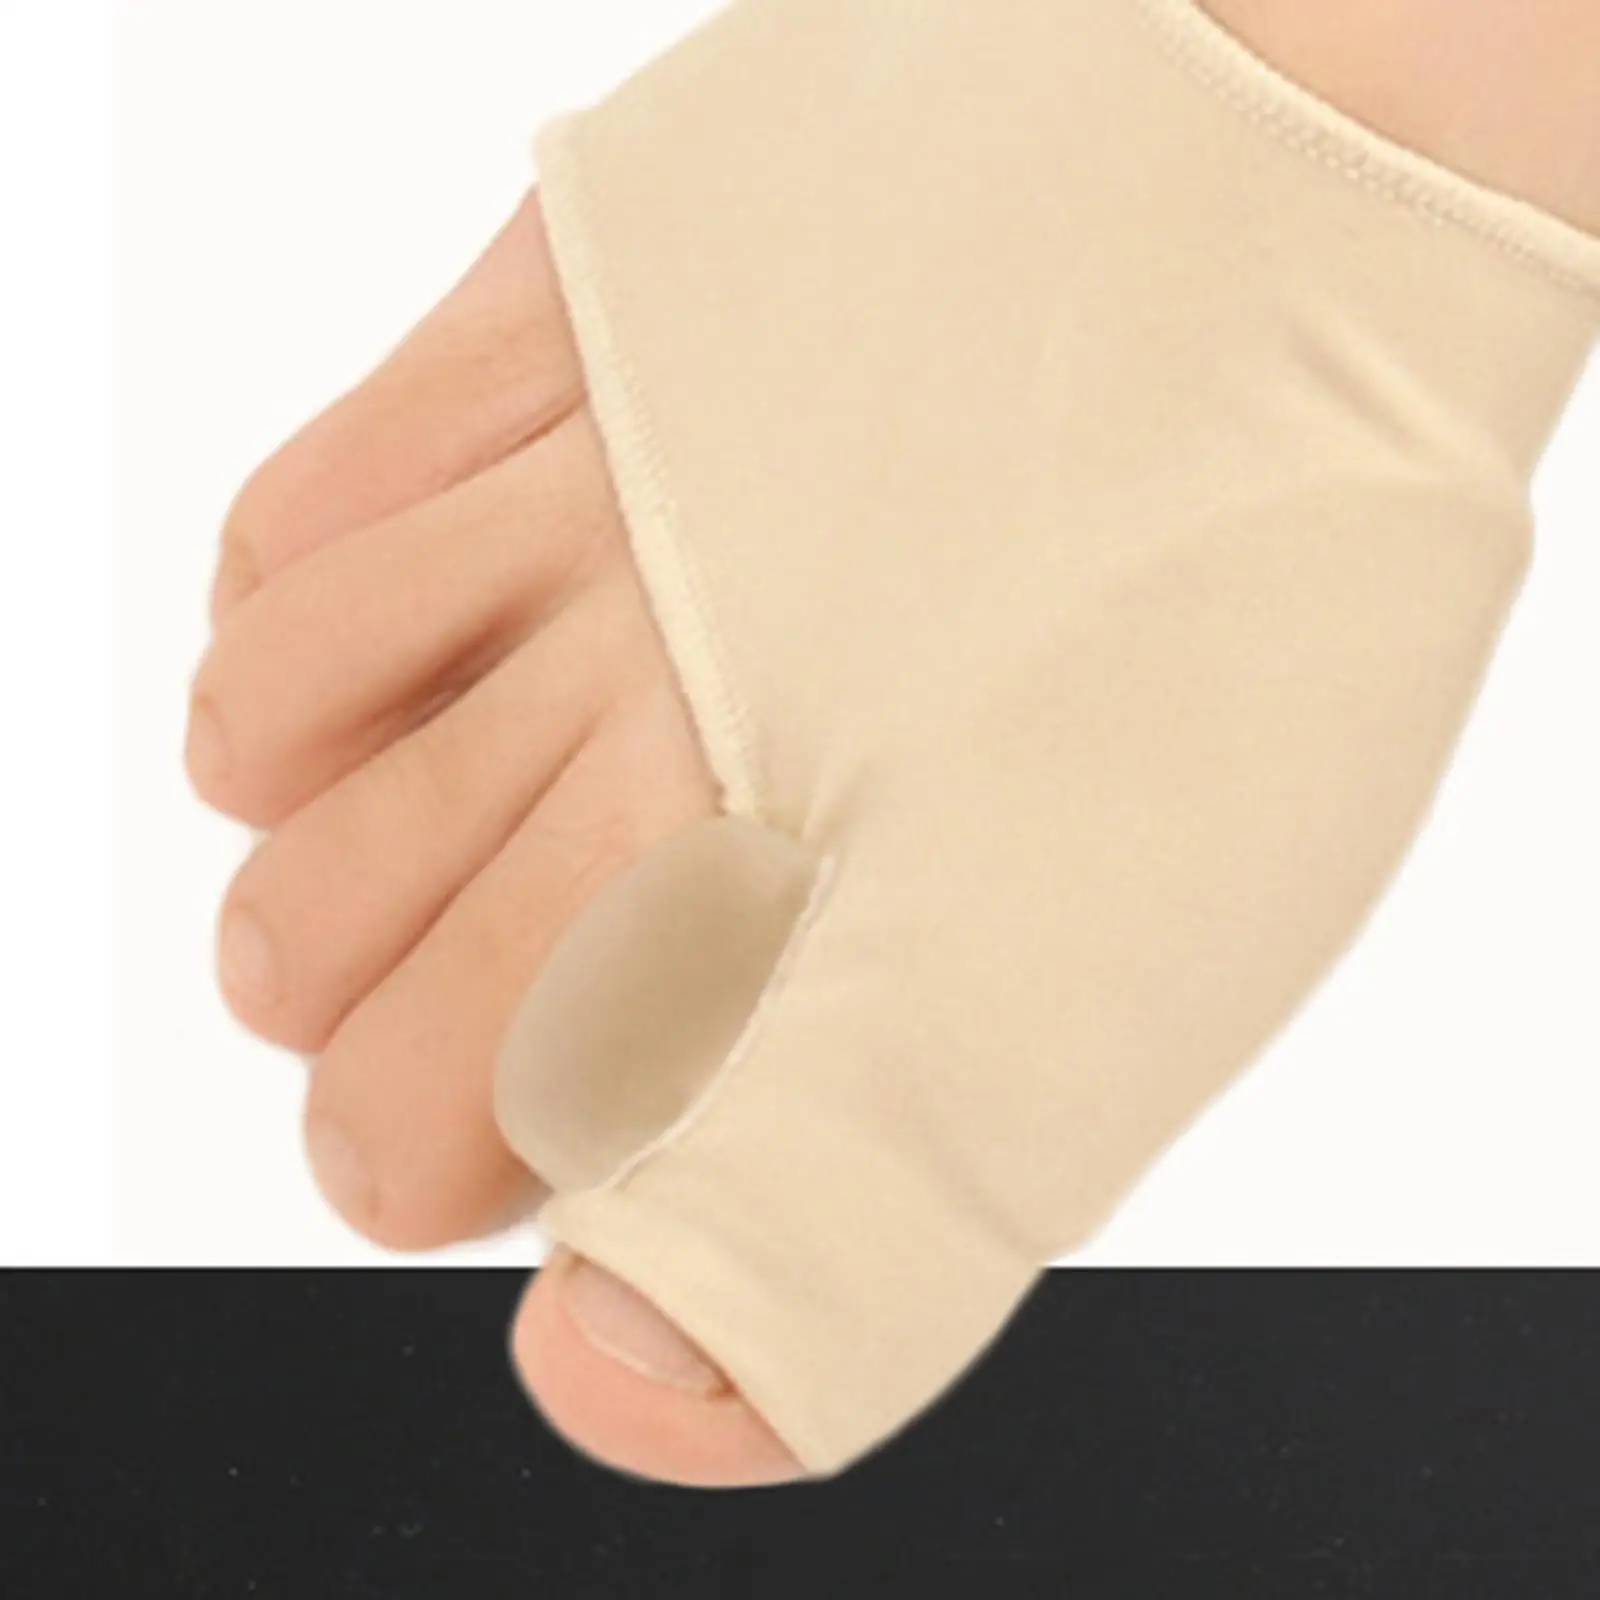 Bunion Corrector Set Men Women Toe Straightener Toe Stretcher Bunion Relief Non Slip Toe Separator Bunion Pads Sleeves Brace